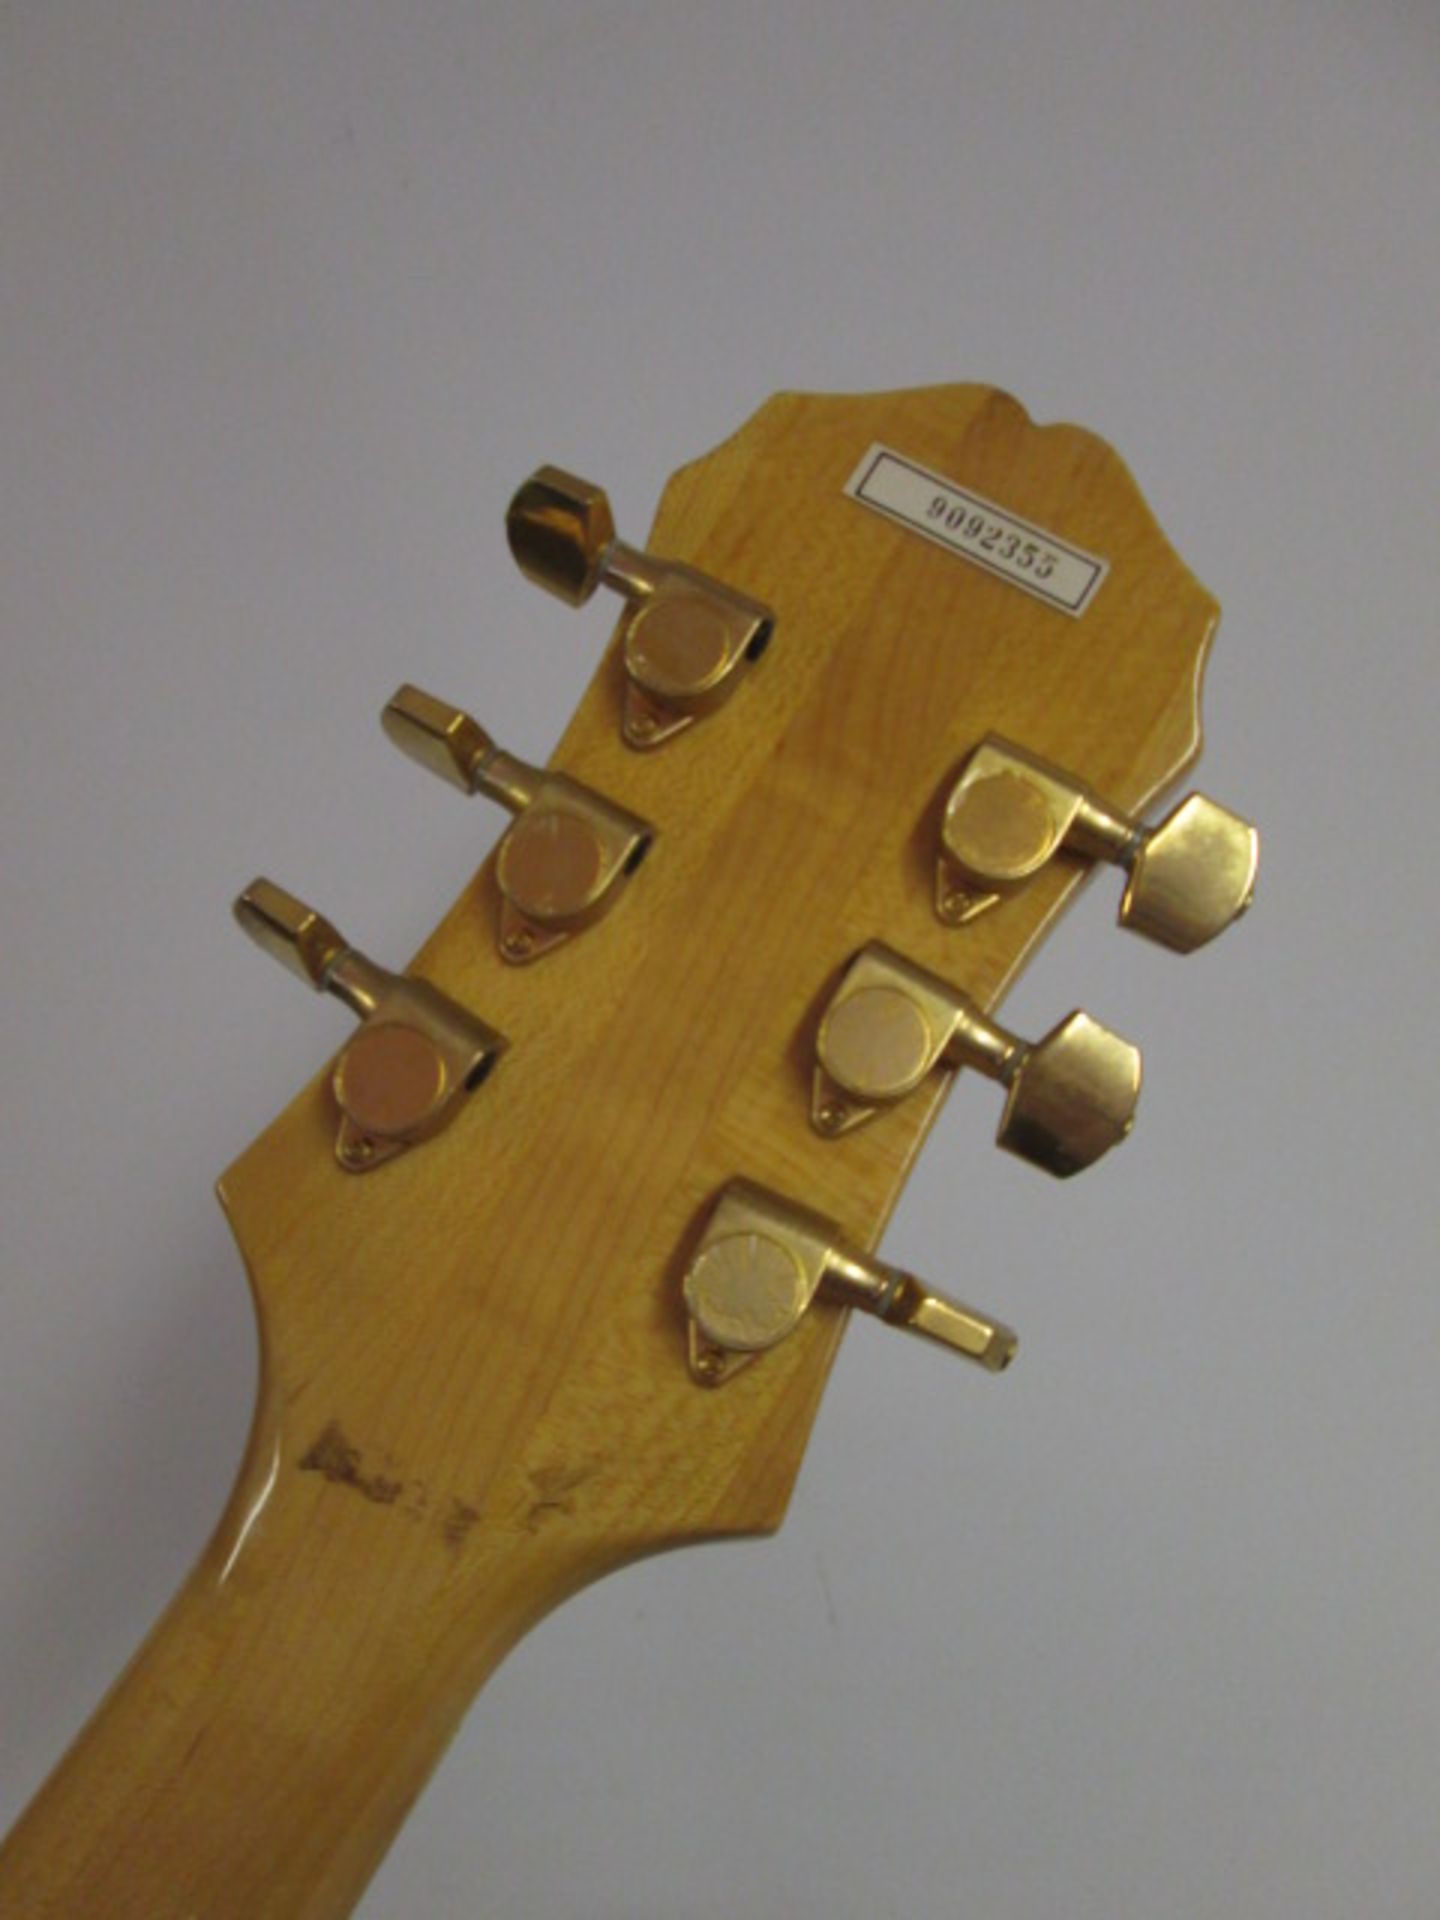 Epiphone Joe Pass Acoustic Guitar - Image 3 of 10